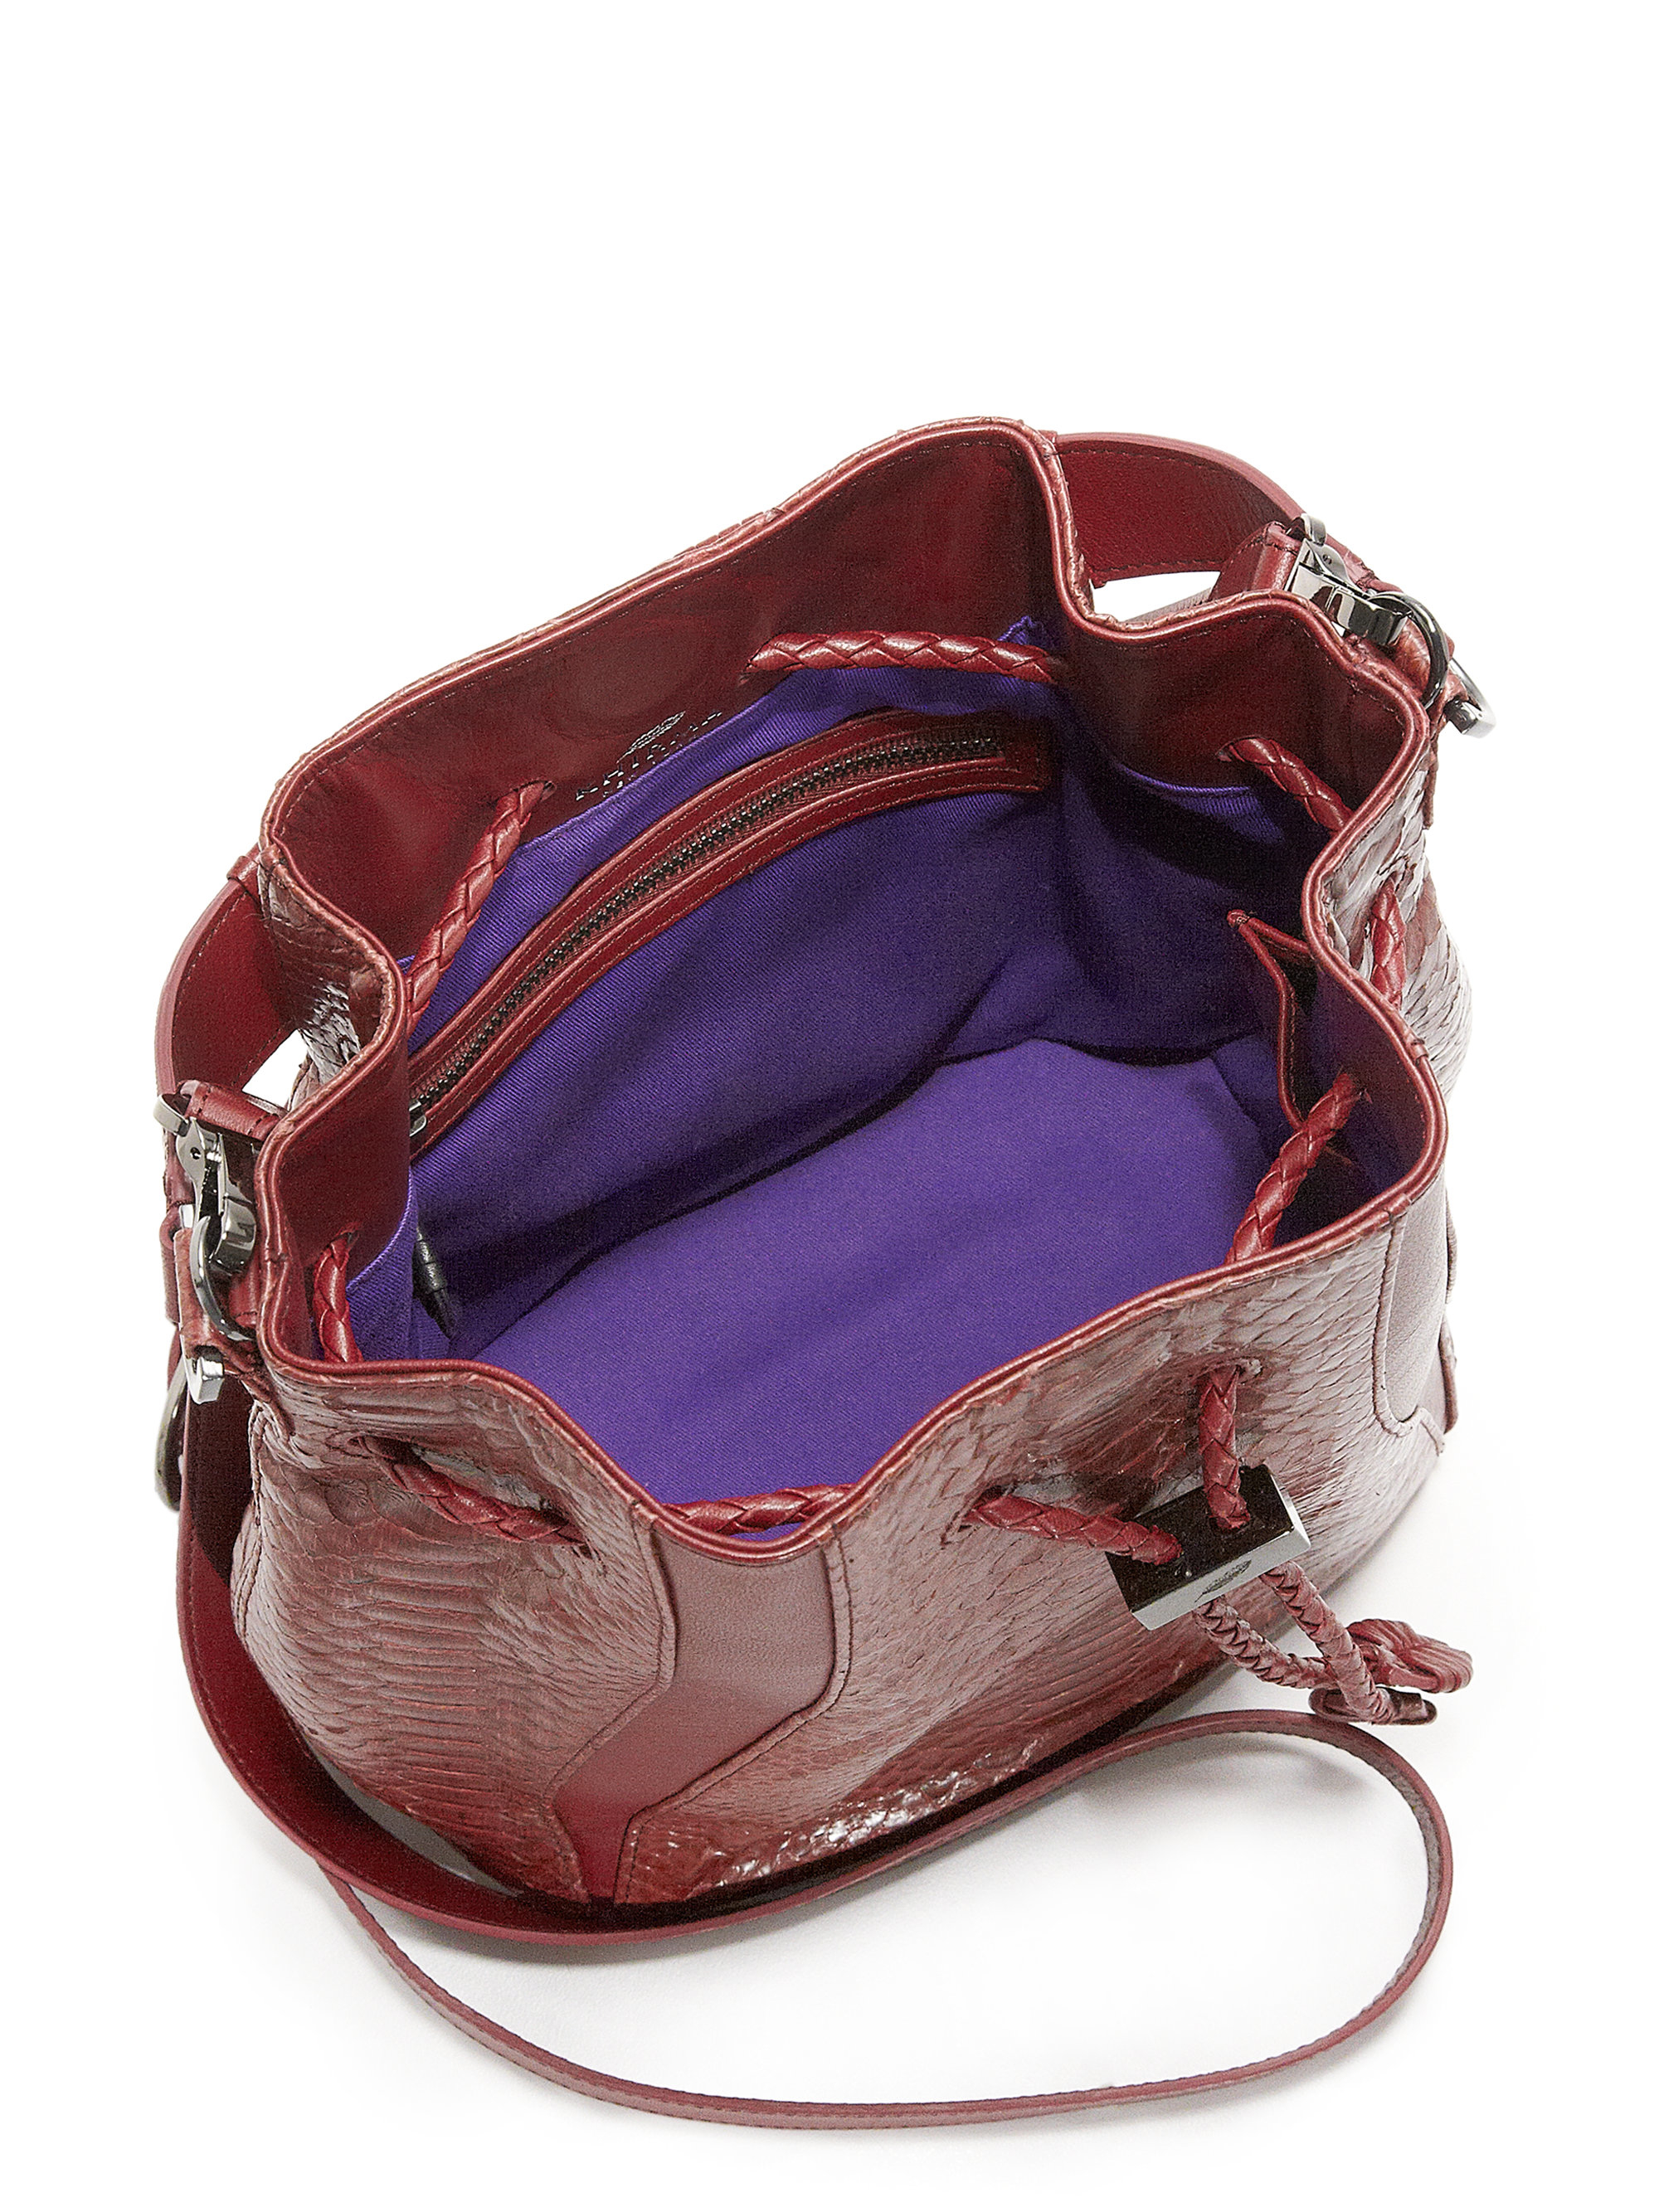 Khirma eliazov Mini Celine Python \u0026amp; Leather Bucket Bag in Red ...  